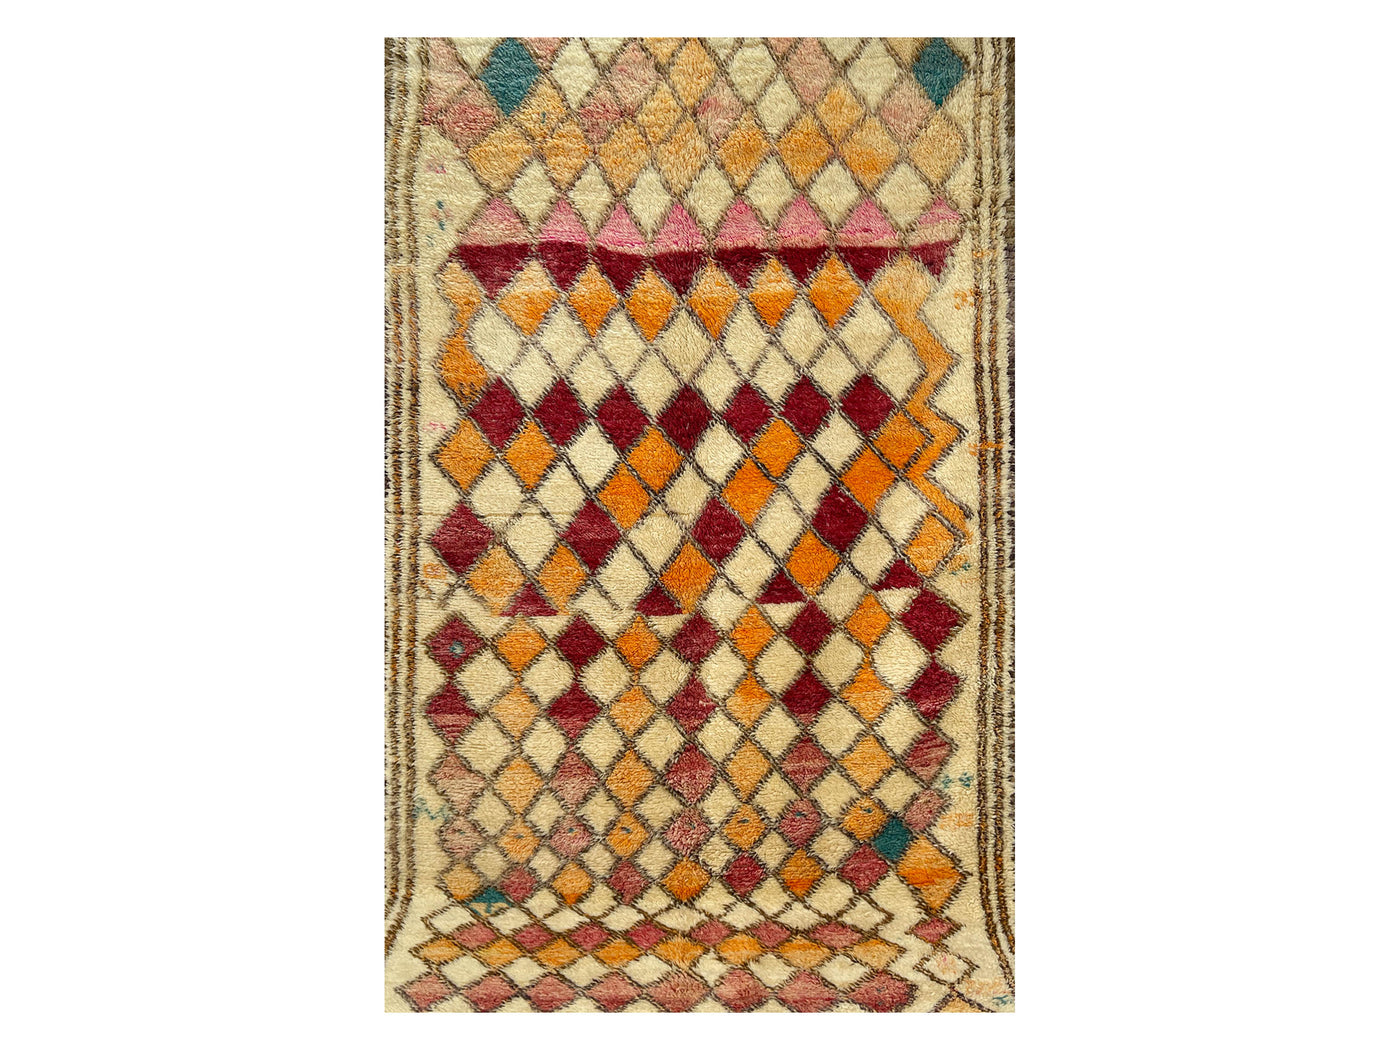 Vintage Moroccan Rug -  Mosaic Beni Ourain Morocco Collection